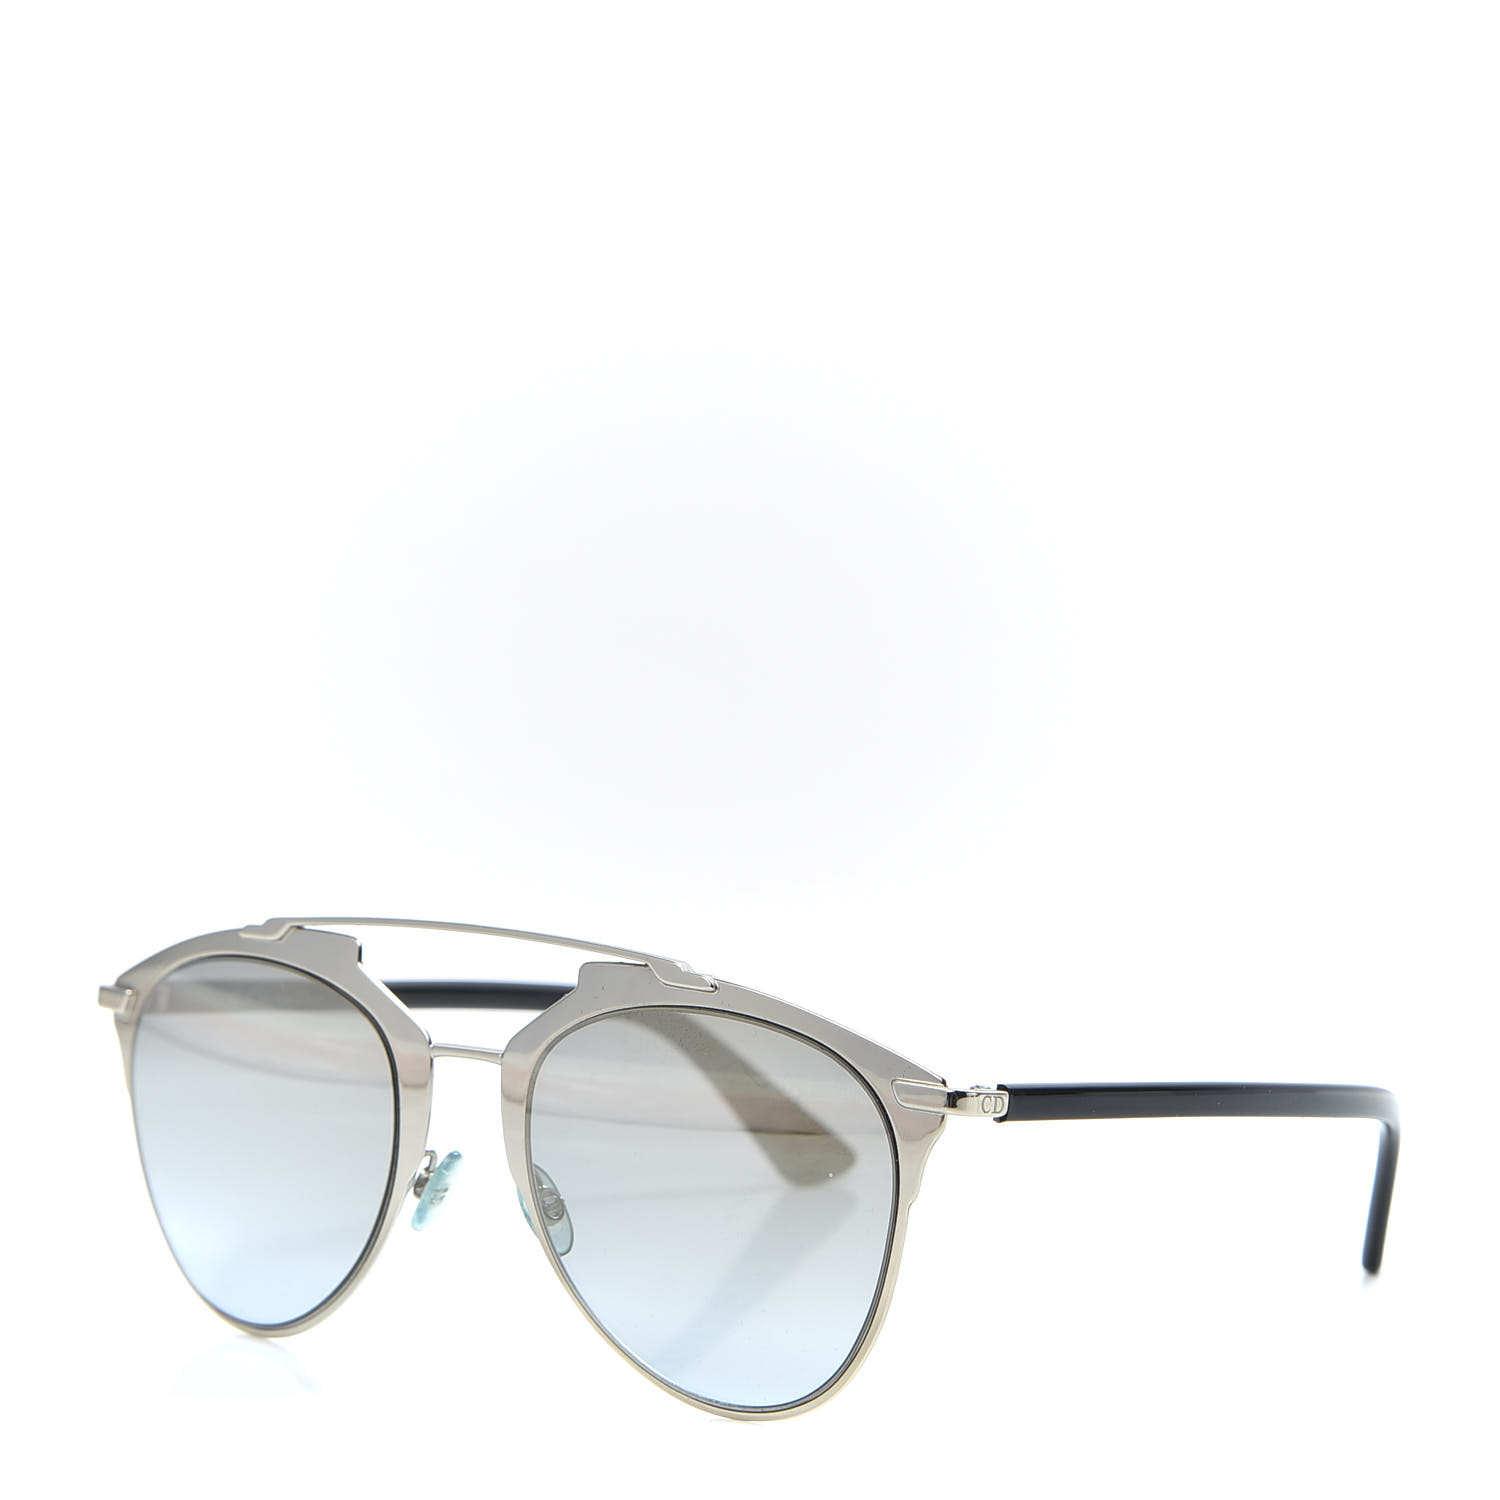 dior reflected sunglasses silver